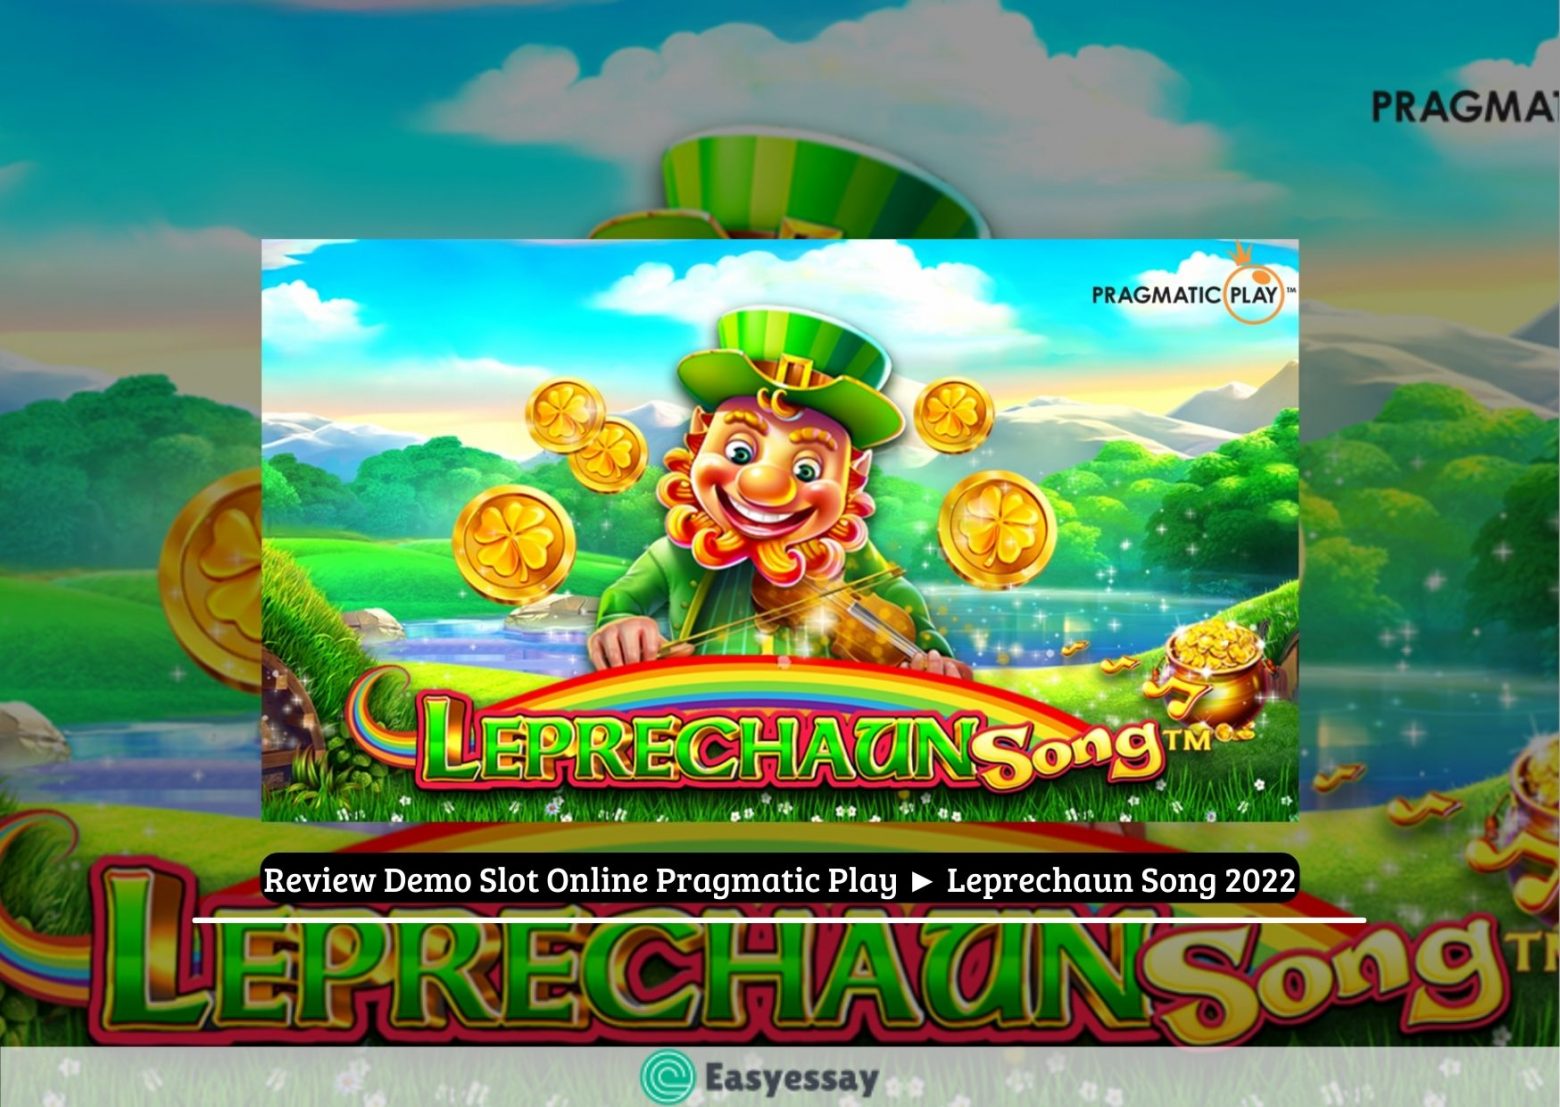 Review Demo Slot Online Pragmatic Play ► Leprechaun Song 2022